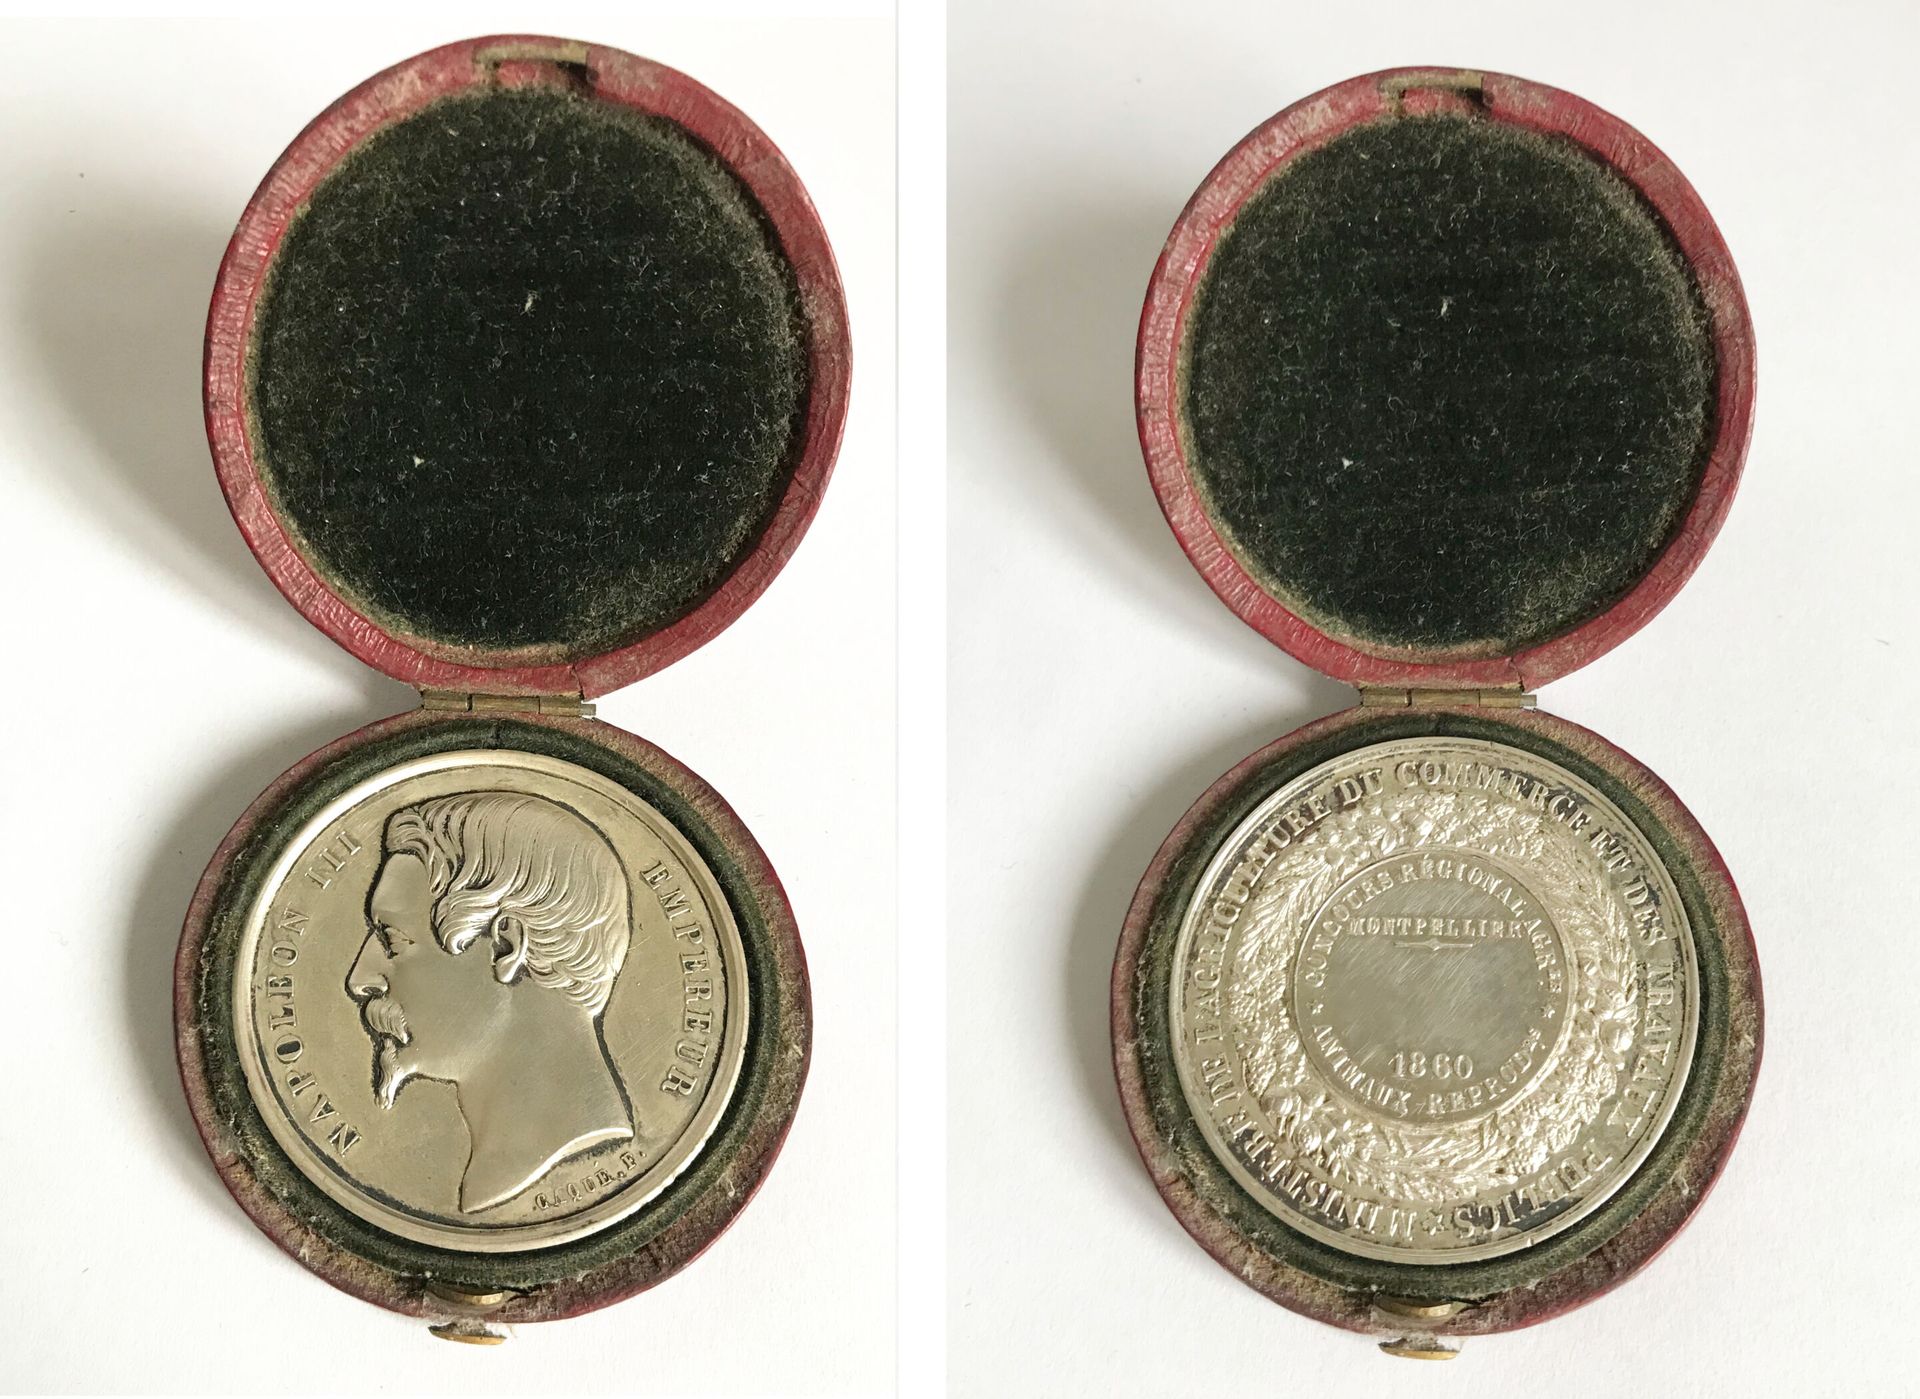 Null 银质奖章，正面是拿破仑三世的肖像，背面是1860年蒙彼利埃地区农业竞赛，由BARRE制作。
重量：35.90克
装在箱子里